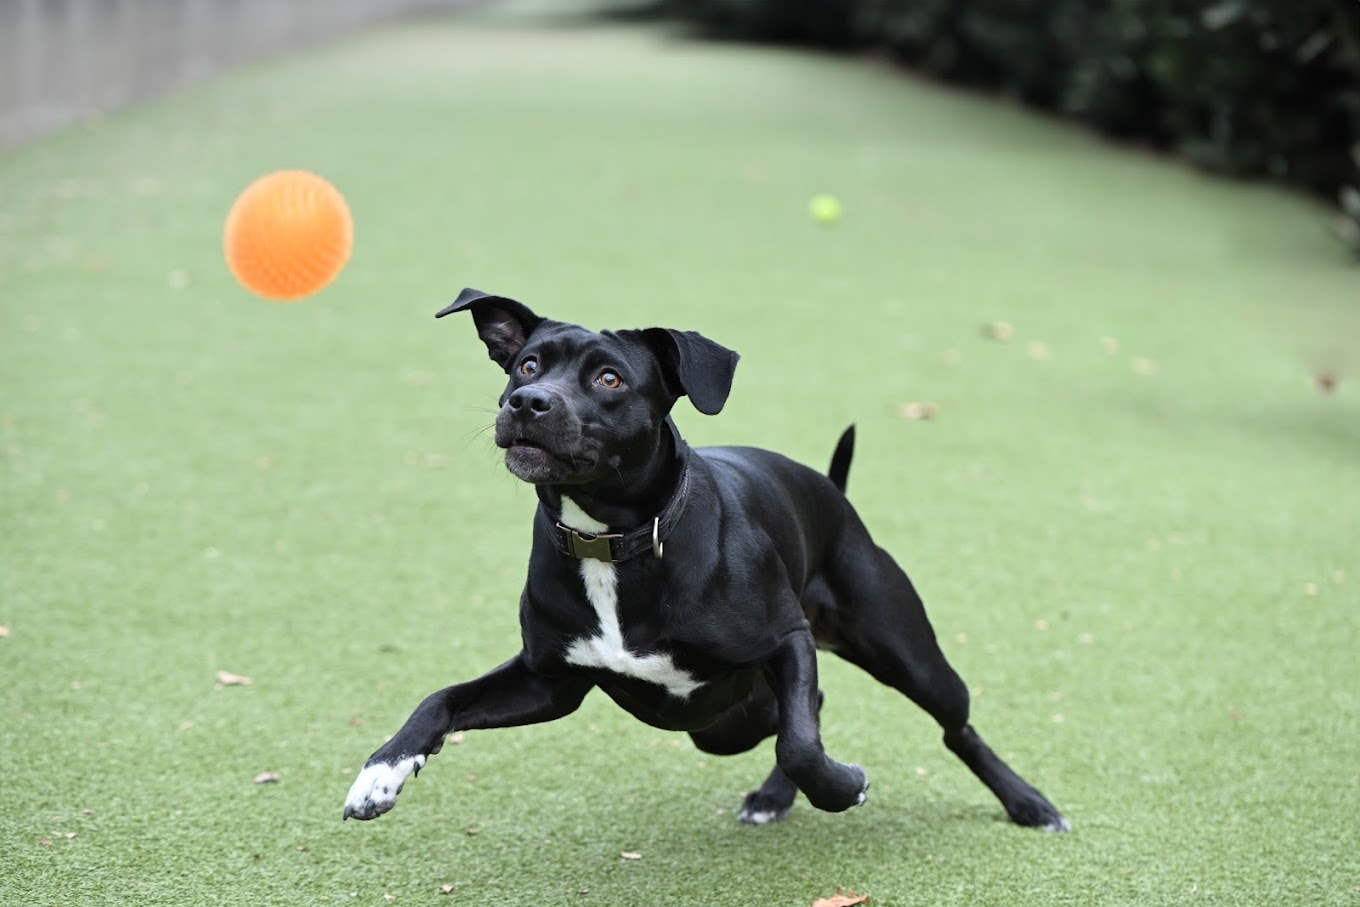 dog chasing ball<br />
